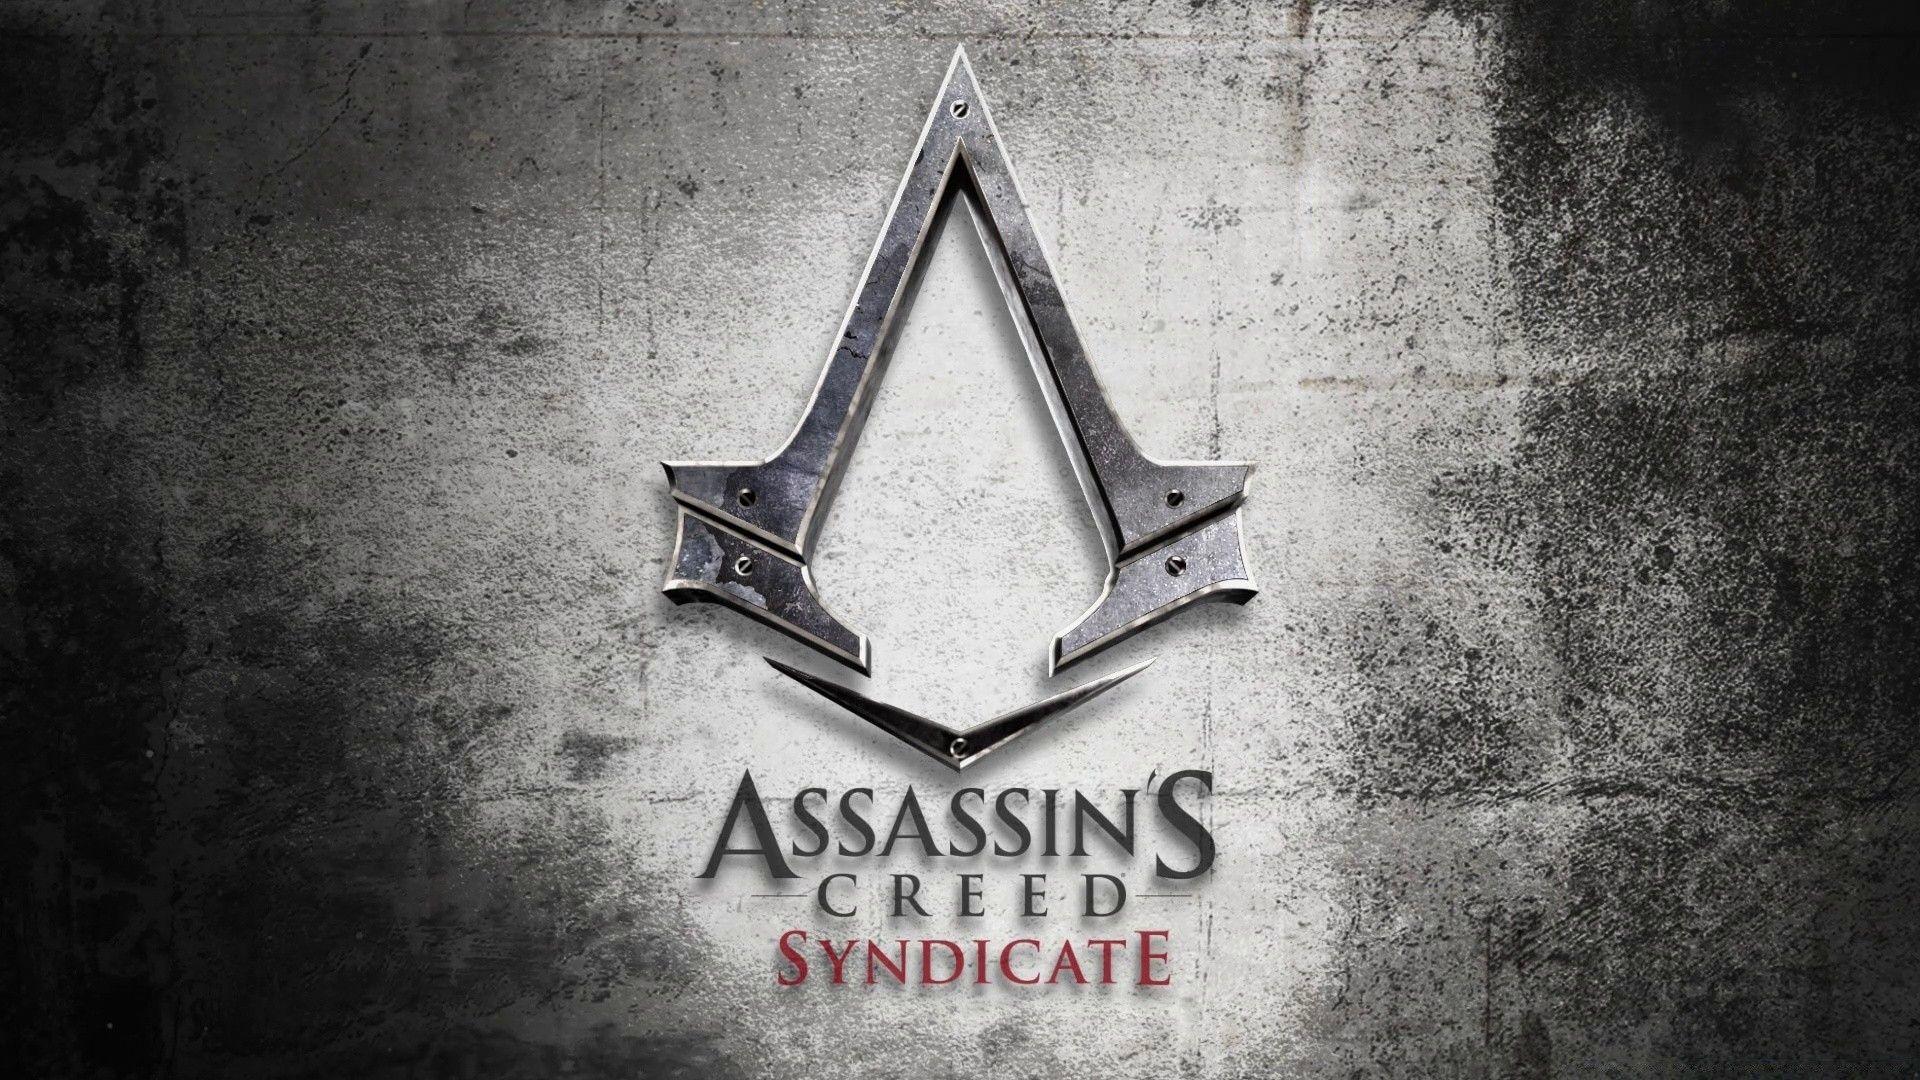 assassins creed unity logo